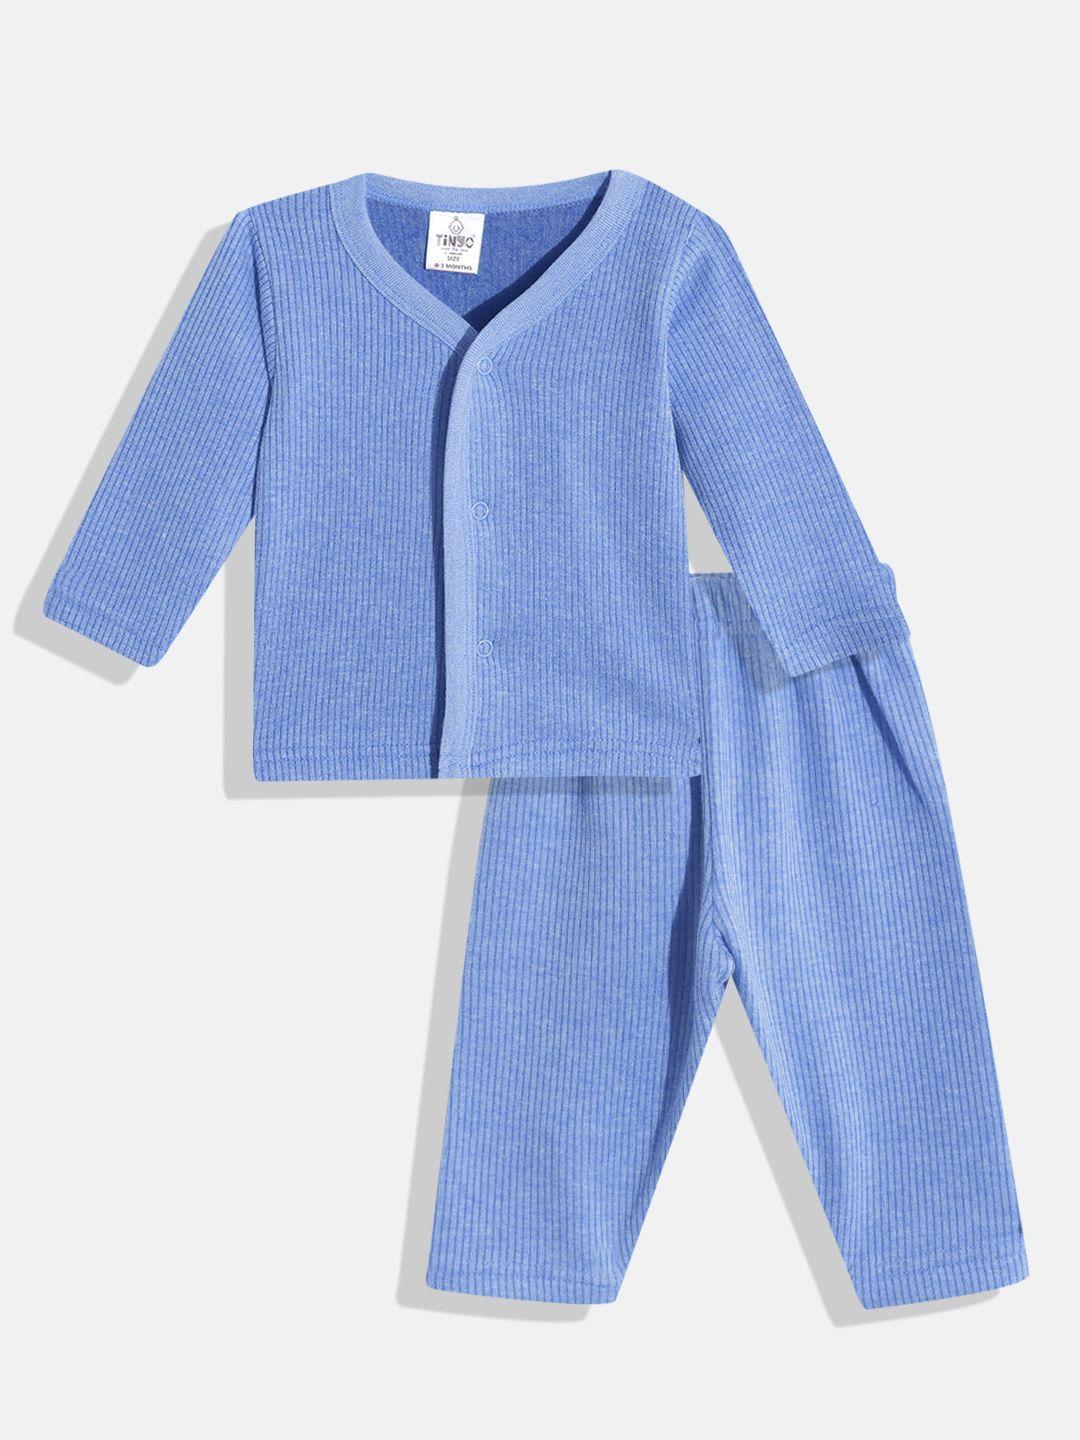 tinyo infant blue ribbed melange effect cotton thermal set